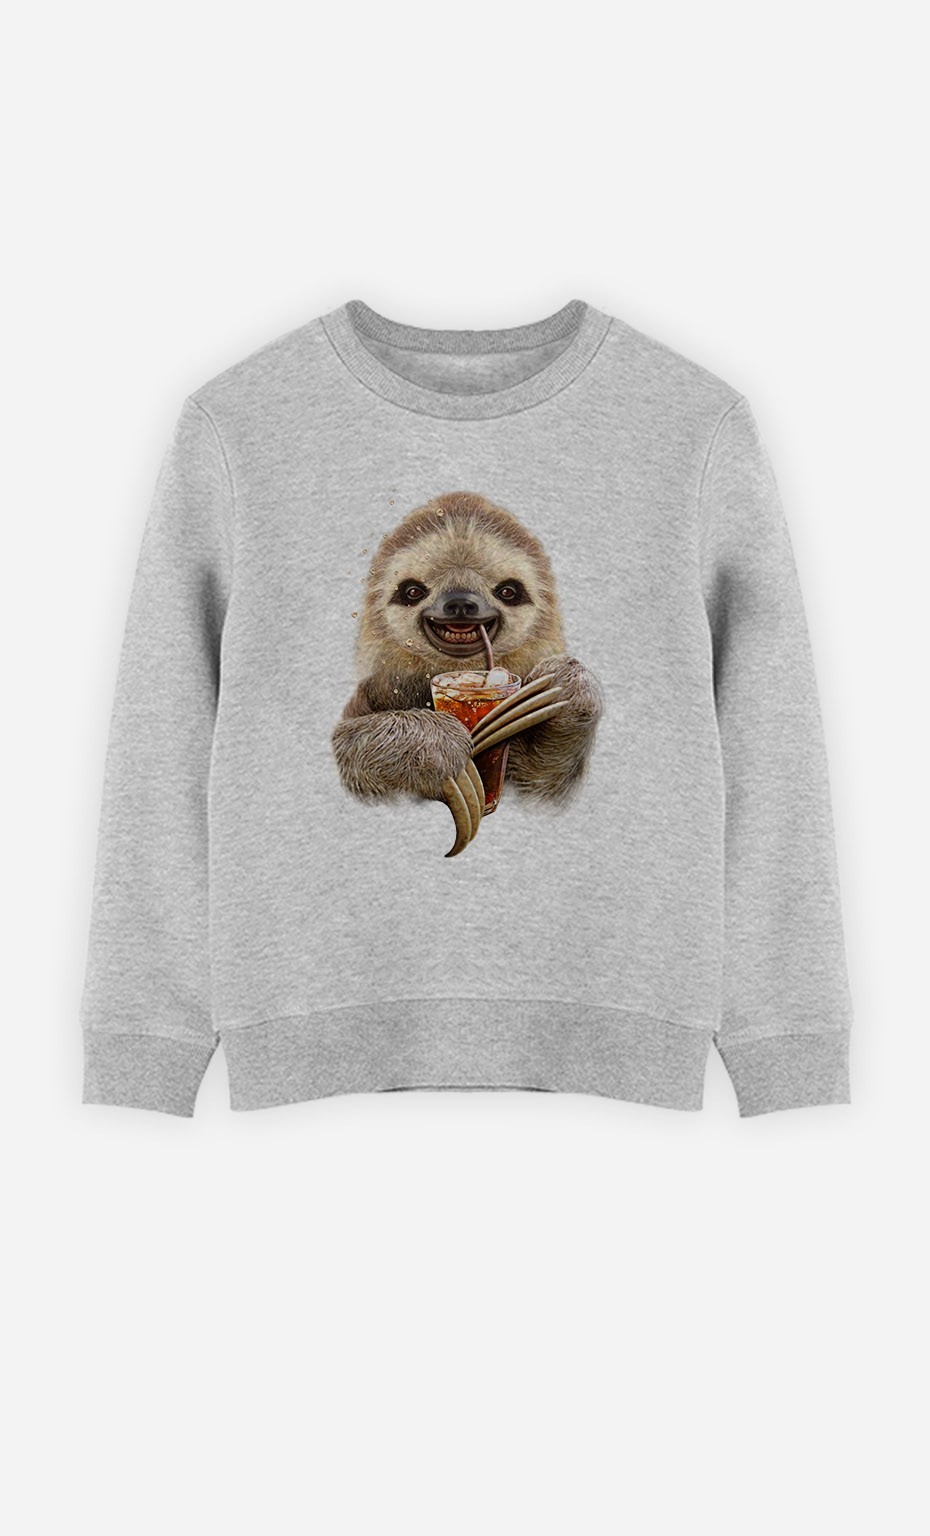 Sweatshirt Sloth & Drink